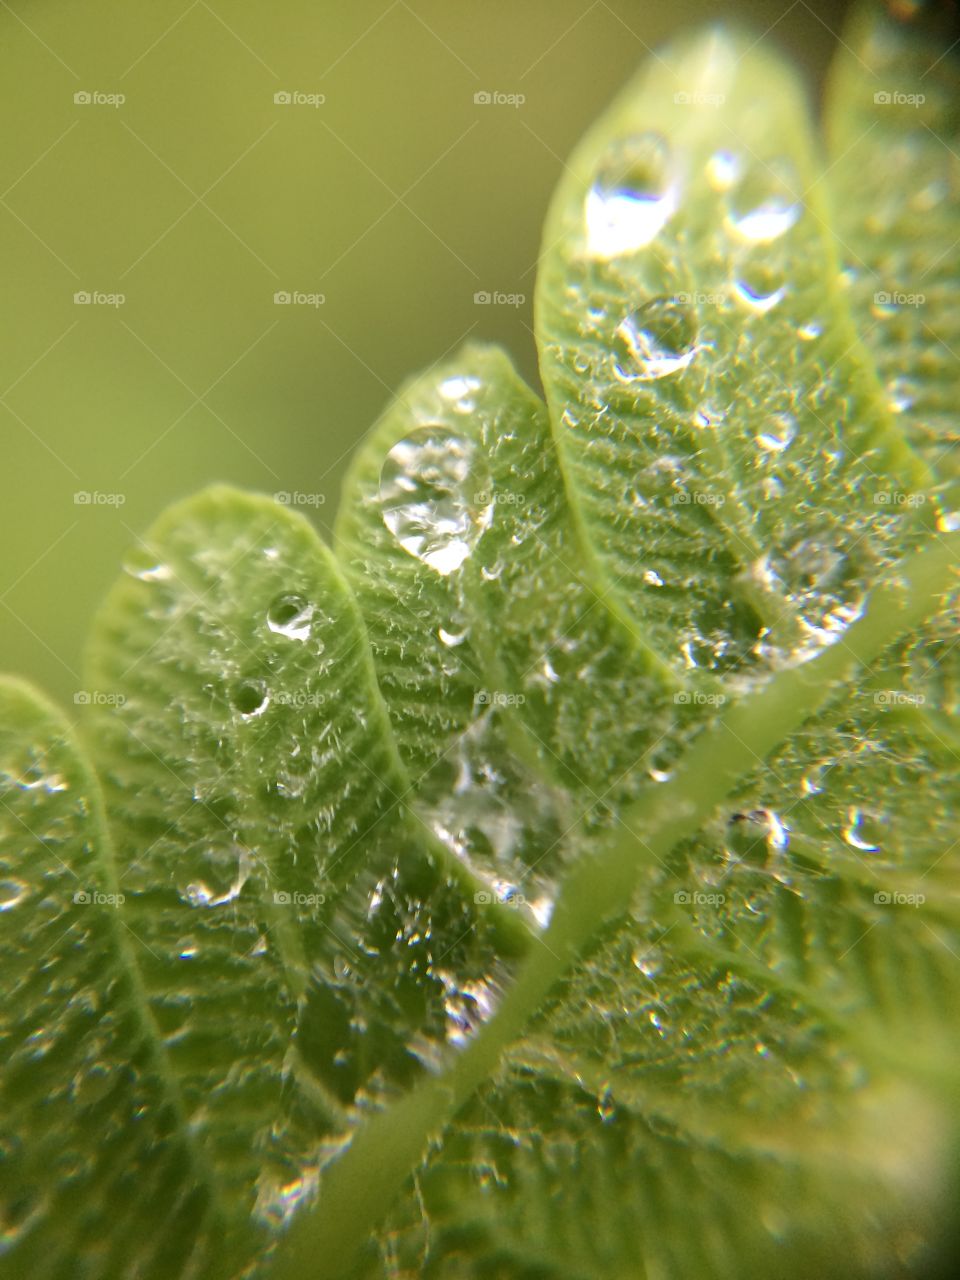 Fern leaf close up 